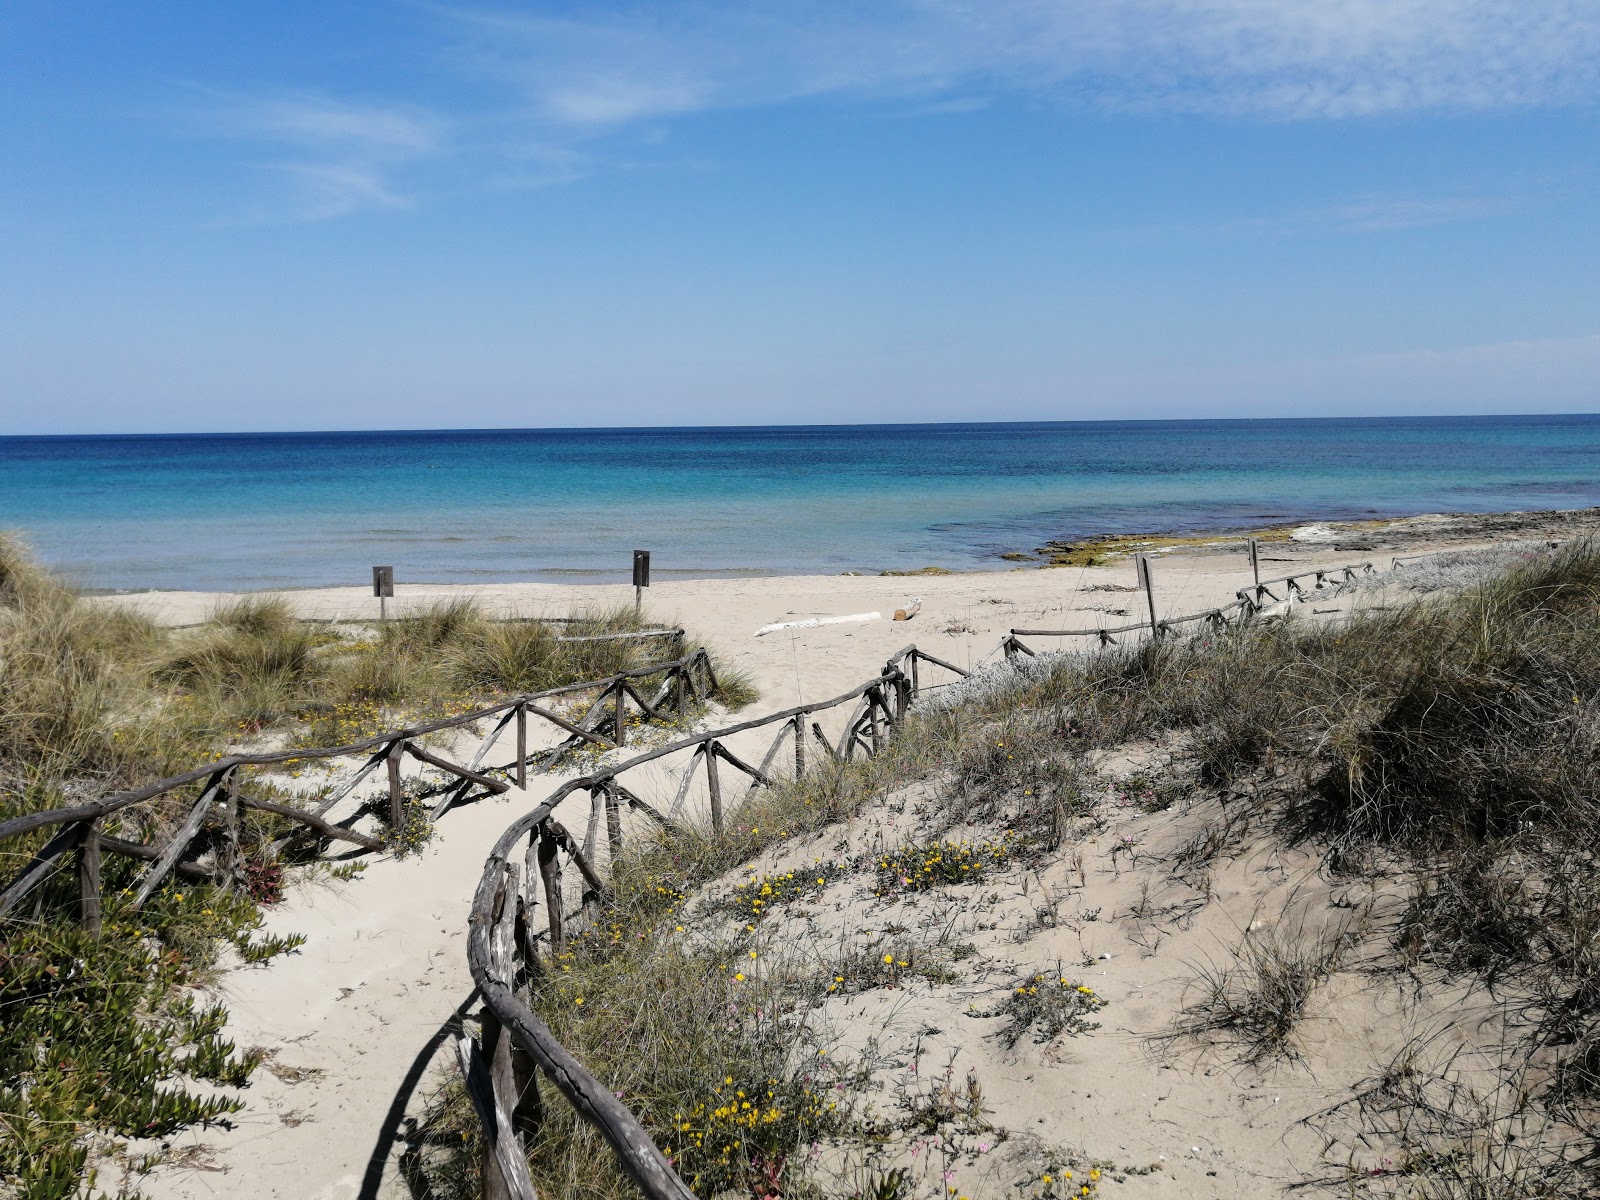 Foto von Spiaggia di Rosa Marina befindet sich in natürlicher umgebung